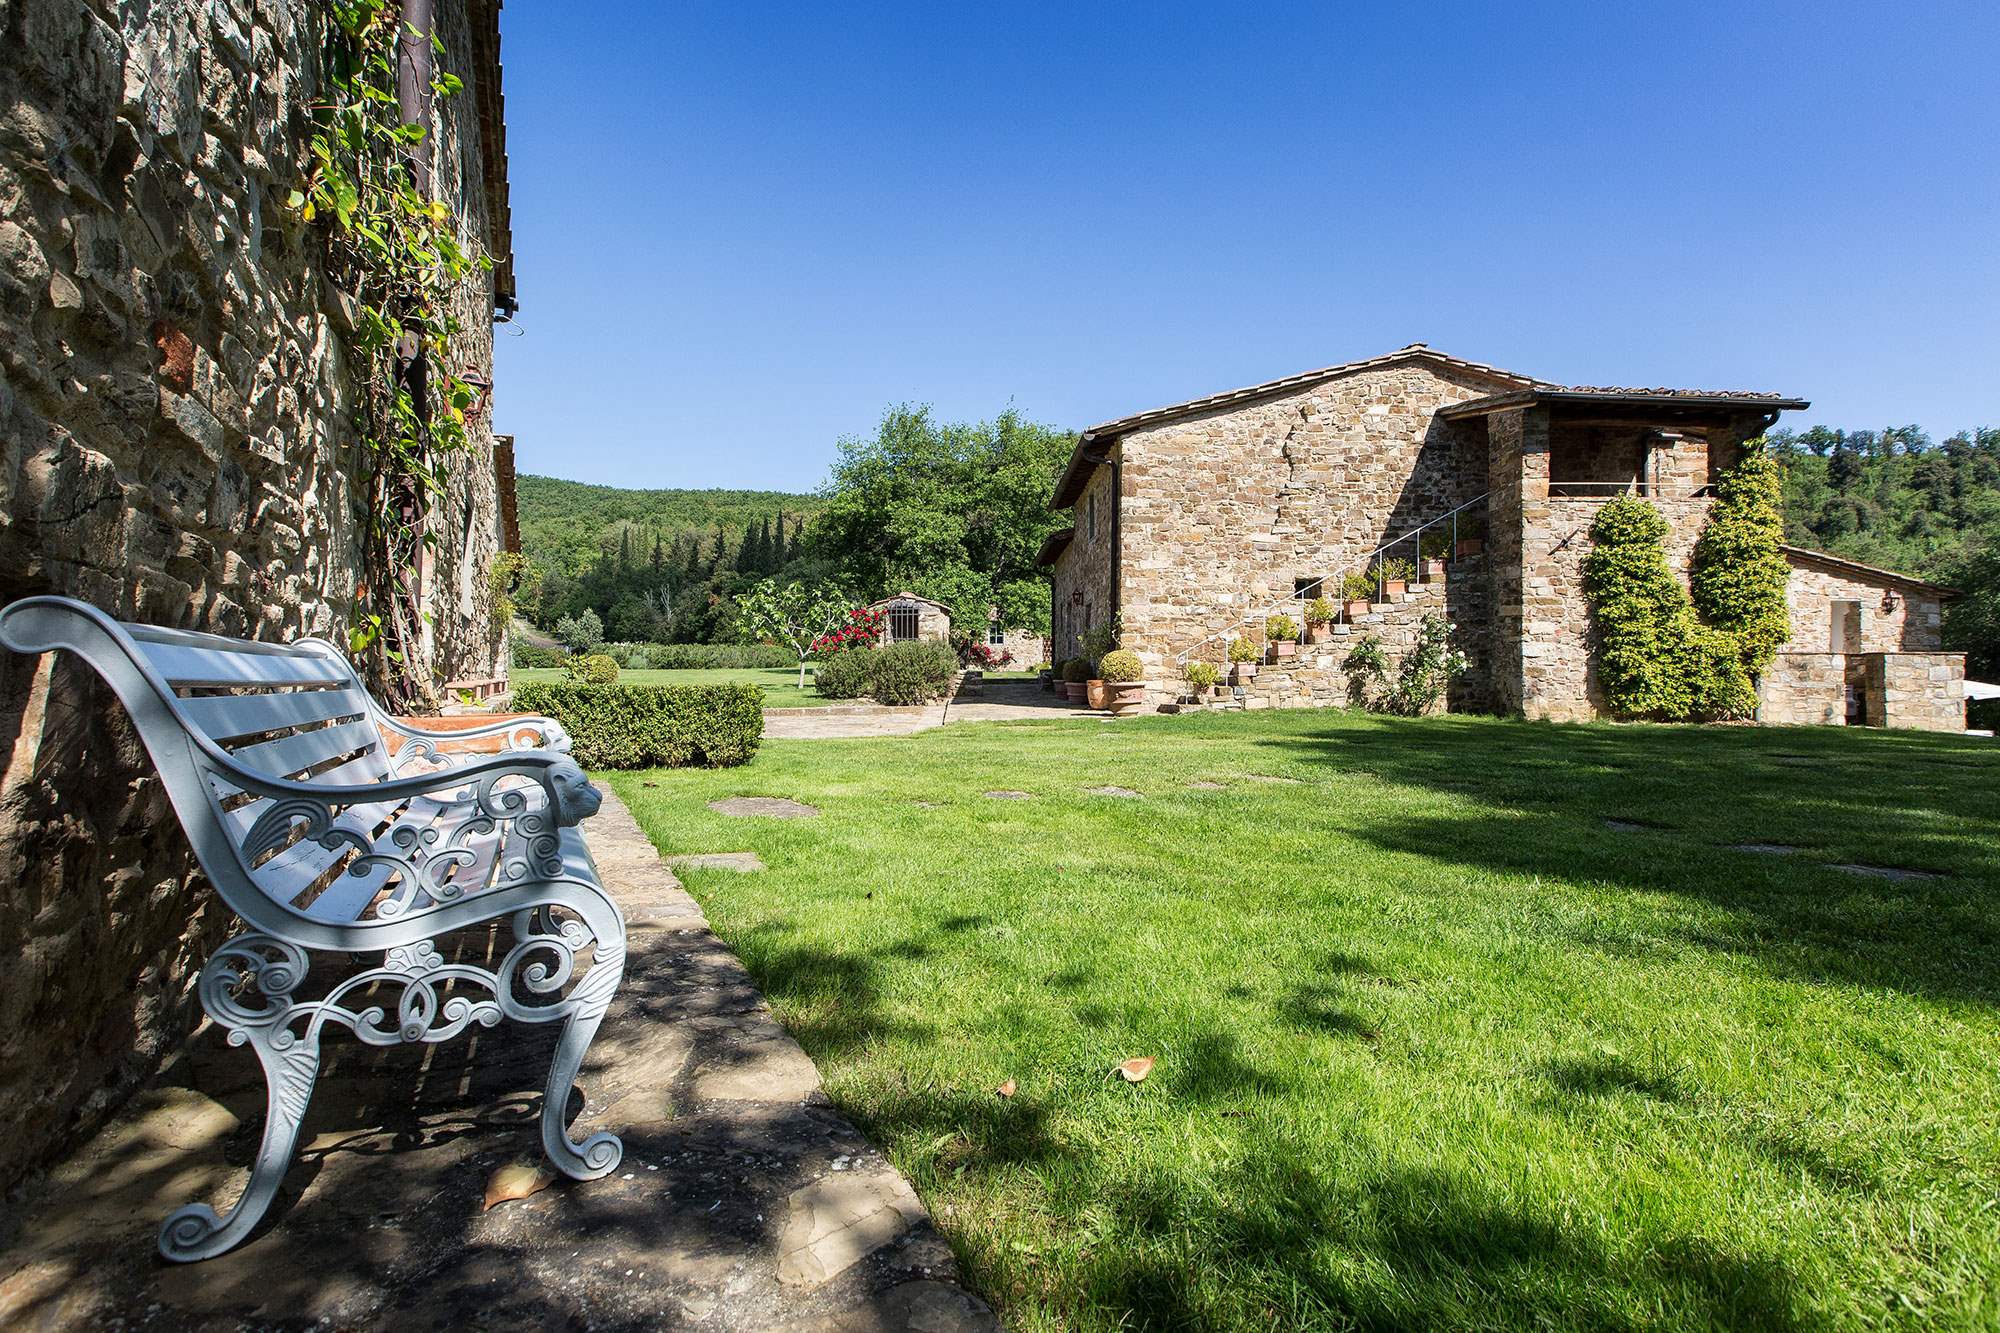 Villa Grande, Main Villa & Suite, up to 14 persons rate, 7 bedroom villa in Chianti & Countryside, Tuscany Photo #41